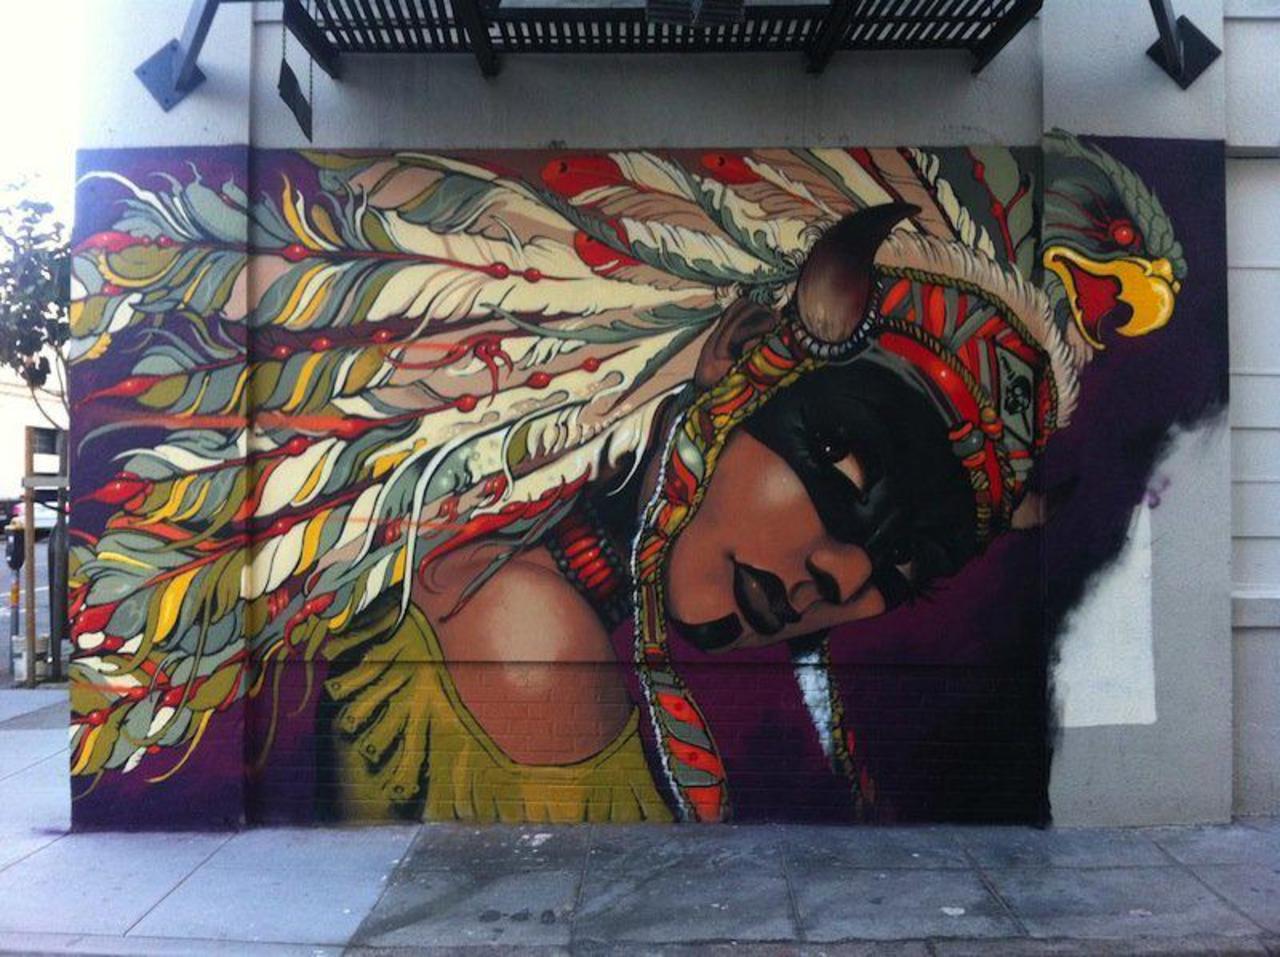 “@DanielGennaoui: War bonnet. Find more amazing #graffiti in our gallery: http://bit.ly/1GPAOAT #mural #art http://t.co/vlz9AMft8Q”